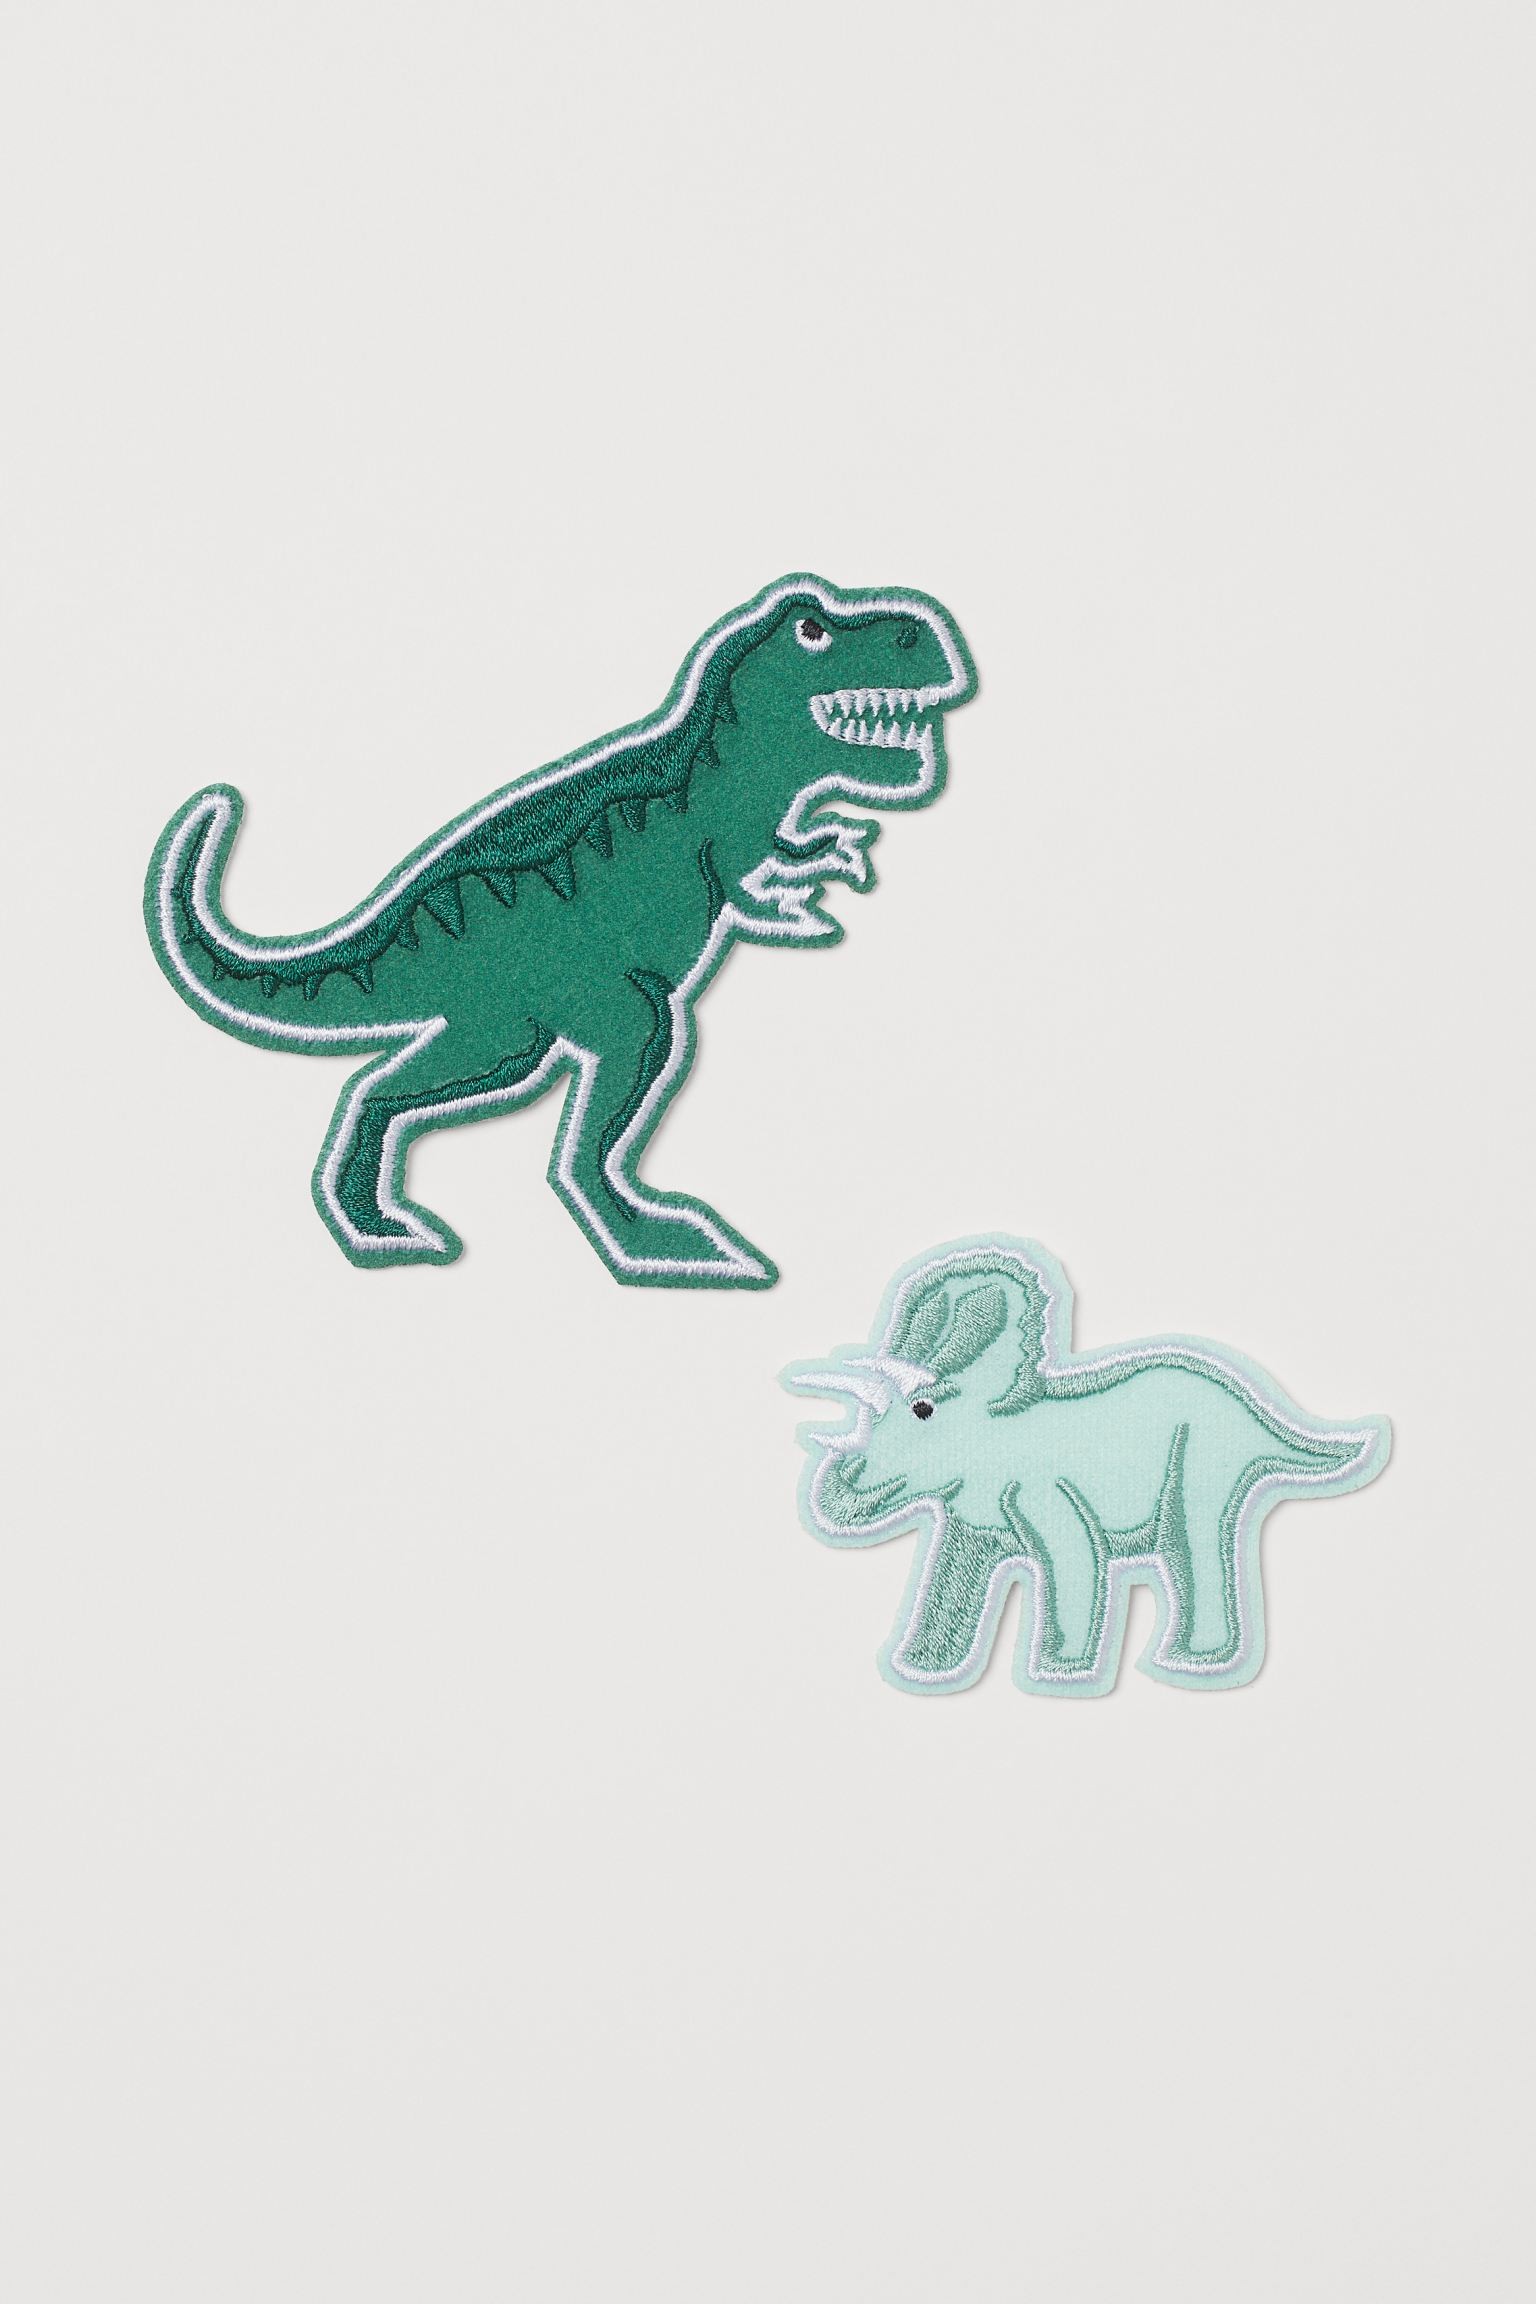 H&M Home Нашивка термоклейка з мотивом динозавра, 2 шт., Зелений/Динозаври 1025579001 1025579001